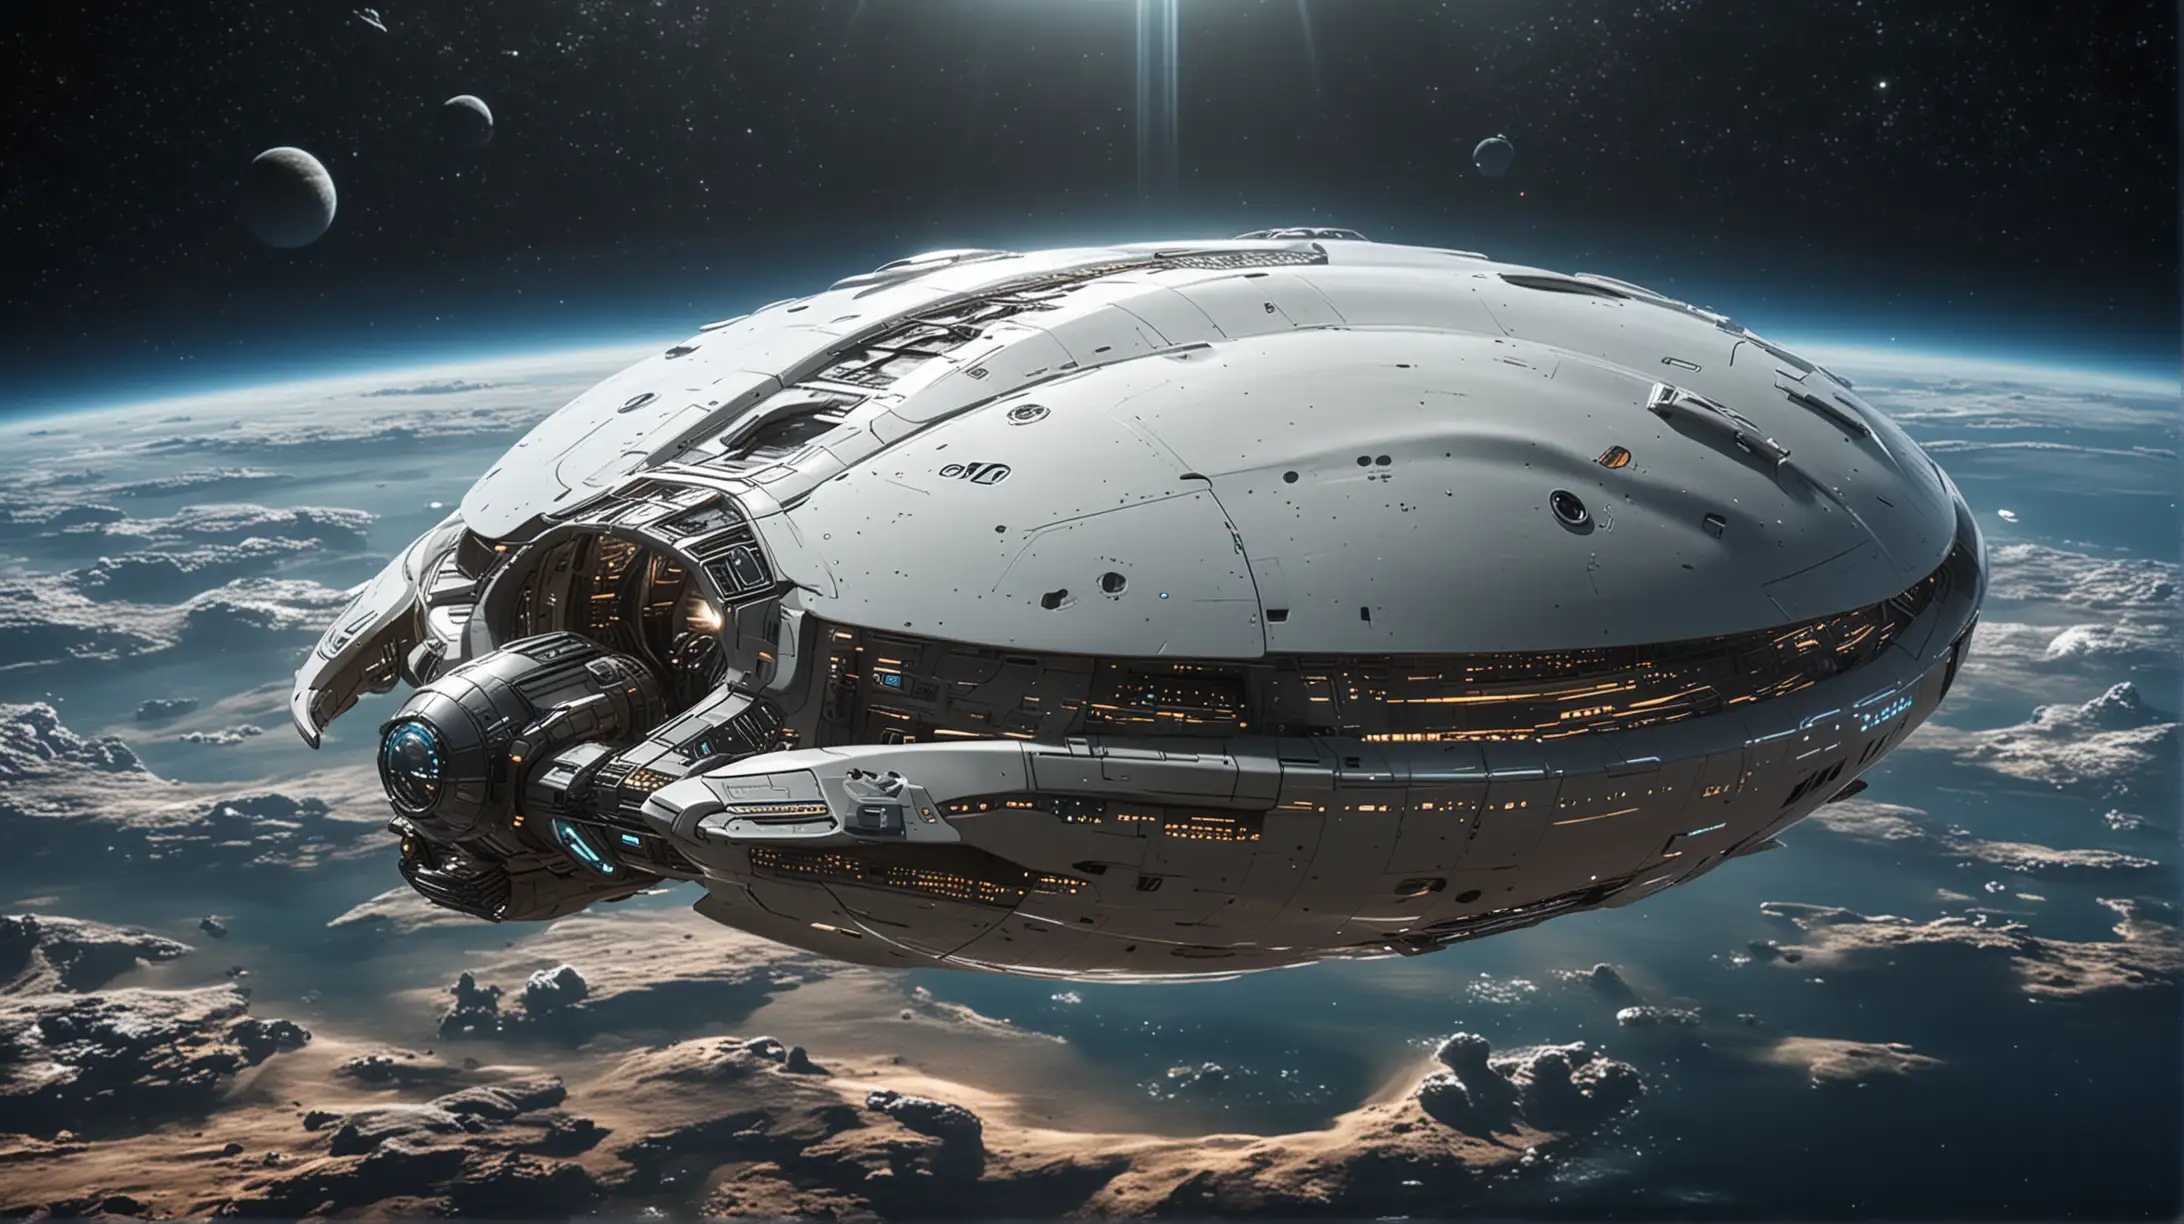 spaceship, shaped like a clam, space, sleek tech, futuristic, sci-fi